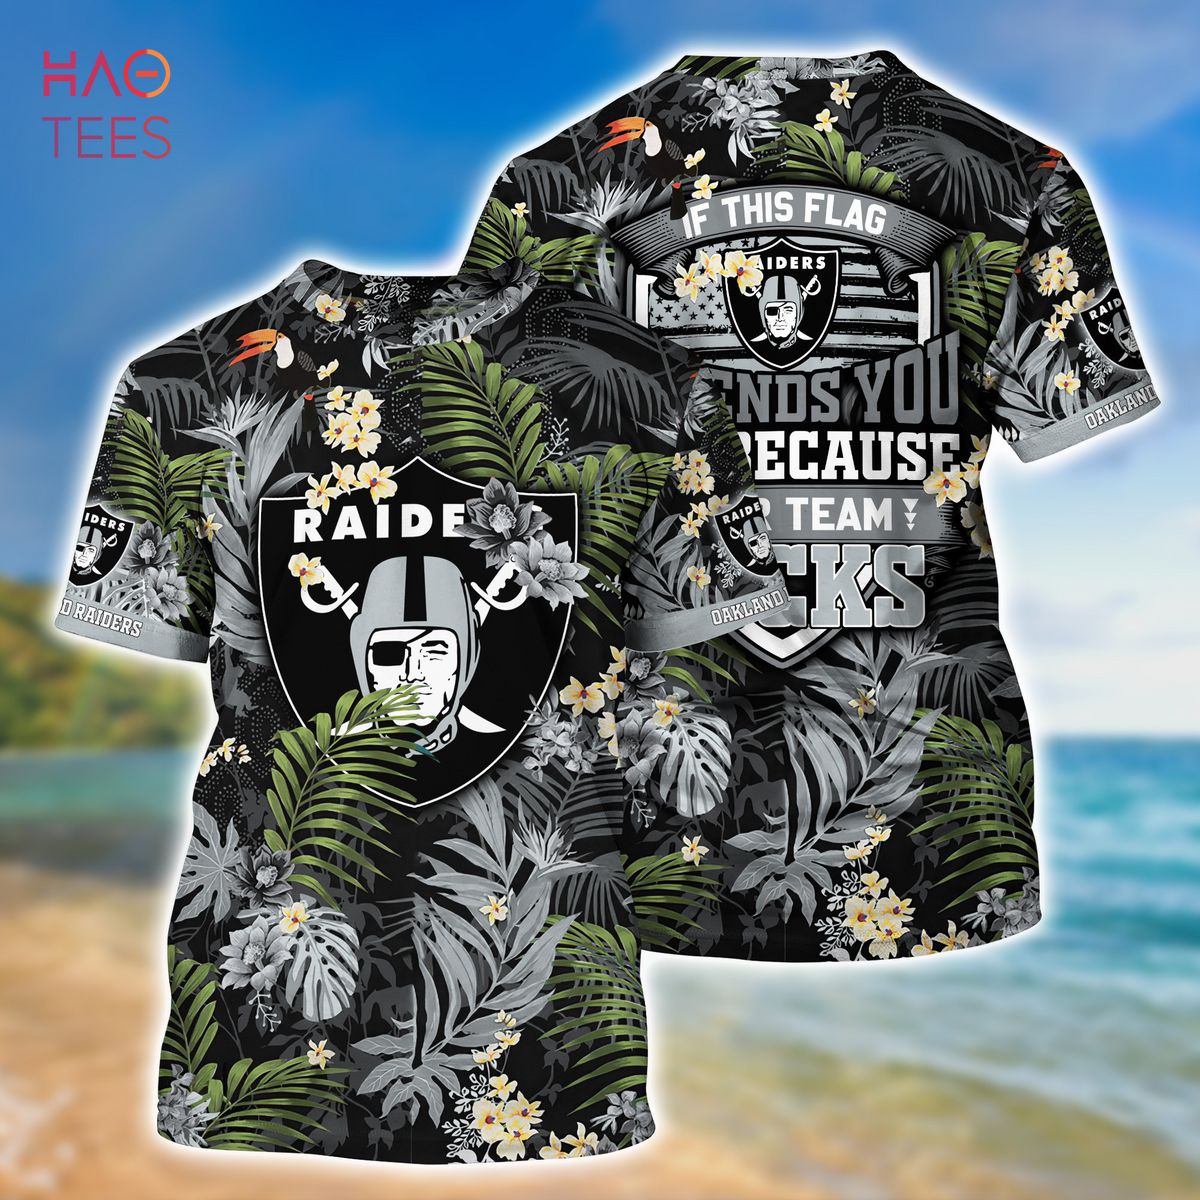 Oakland Athletics New Trends Custom Name And Number Christmas Hawaiian Shirt  - Freedomdesign